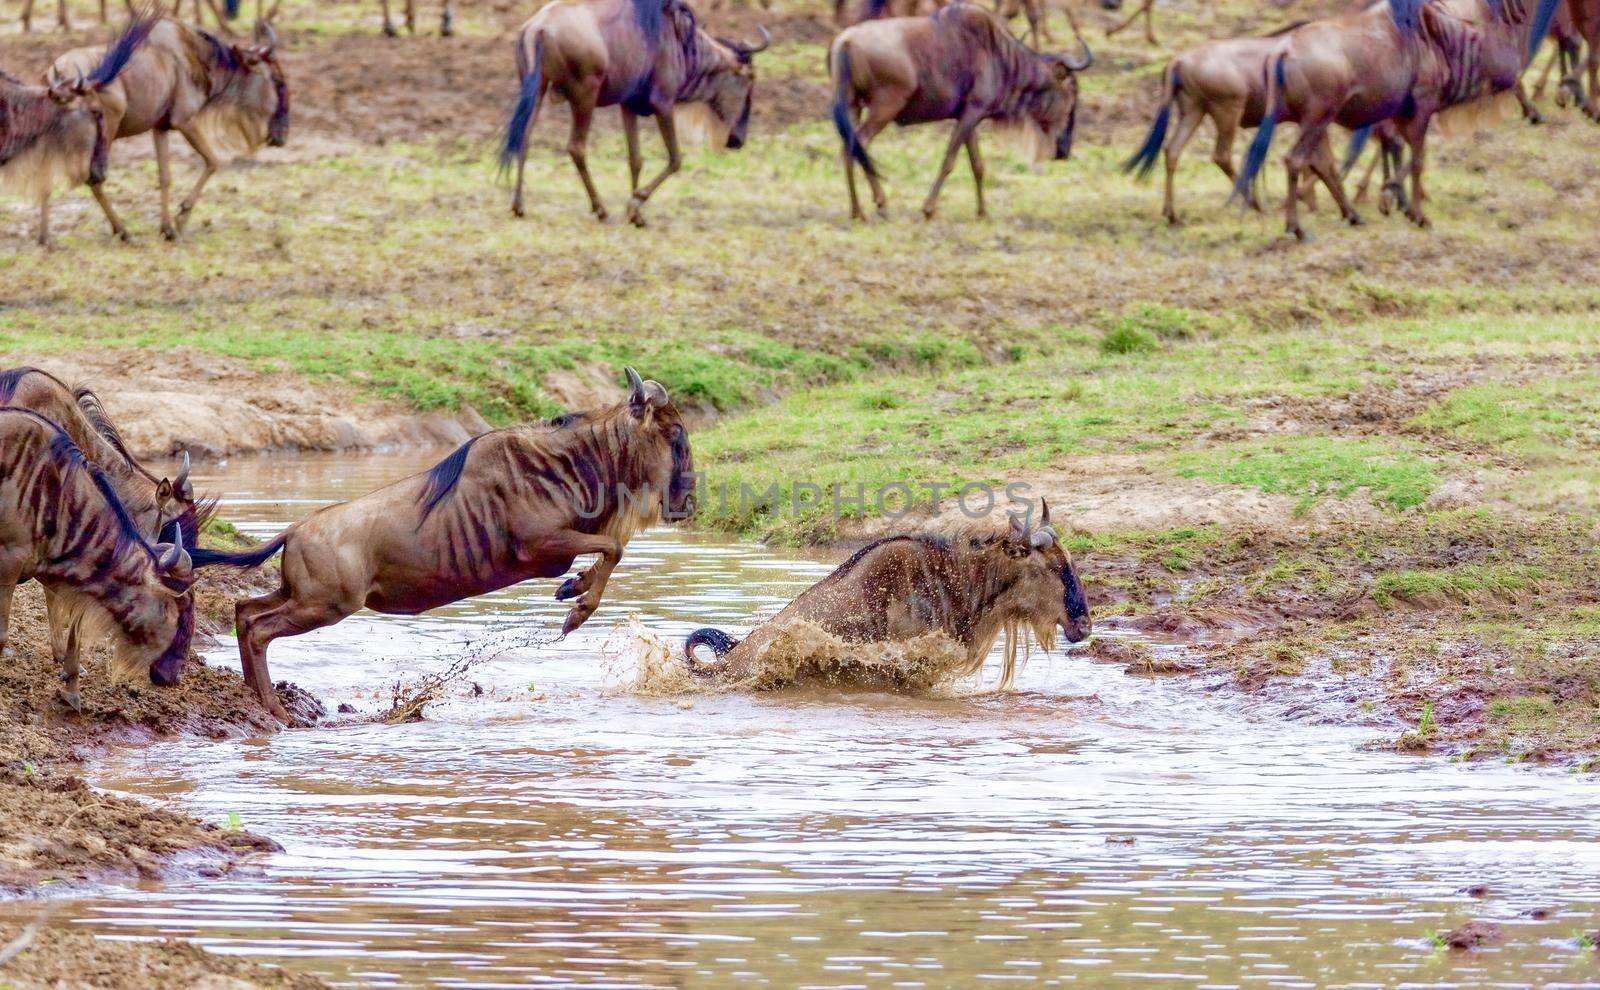 Crossing. Kenya. National park. The wildebeest and the zebras cr by kolesnikov_studio